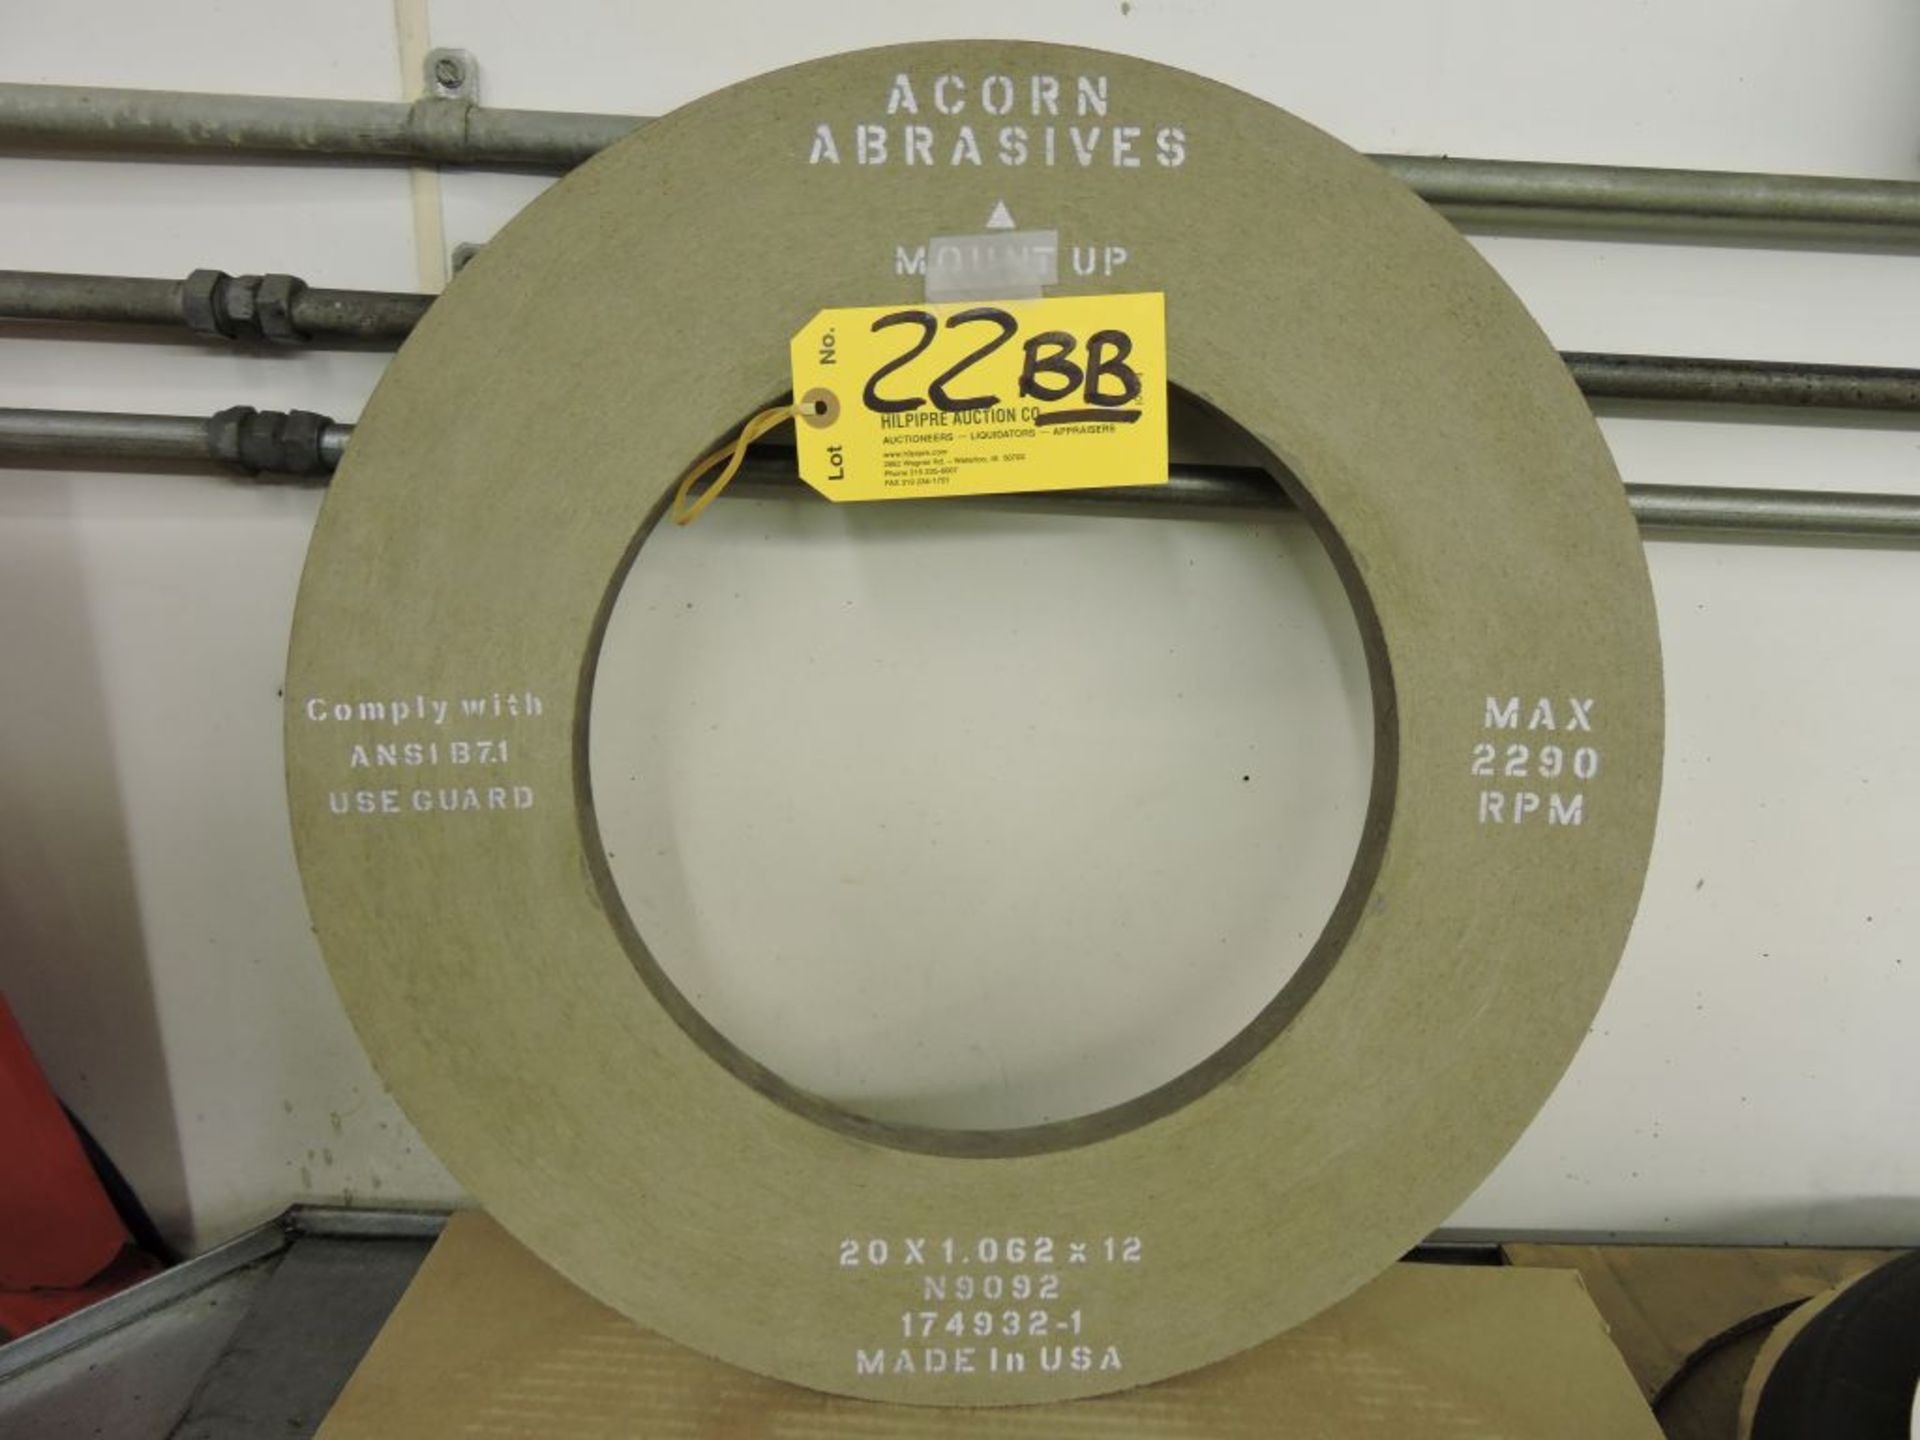 Grinding wheel ACORN abrasives, 20 x 1.062 x 12, model N9092.